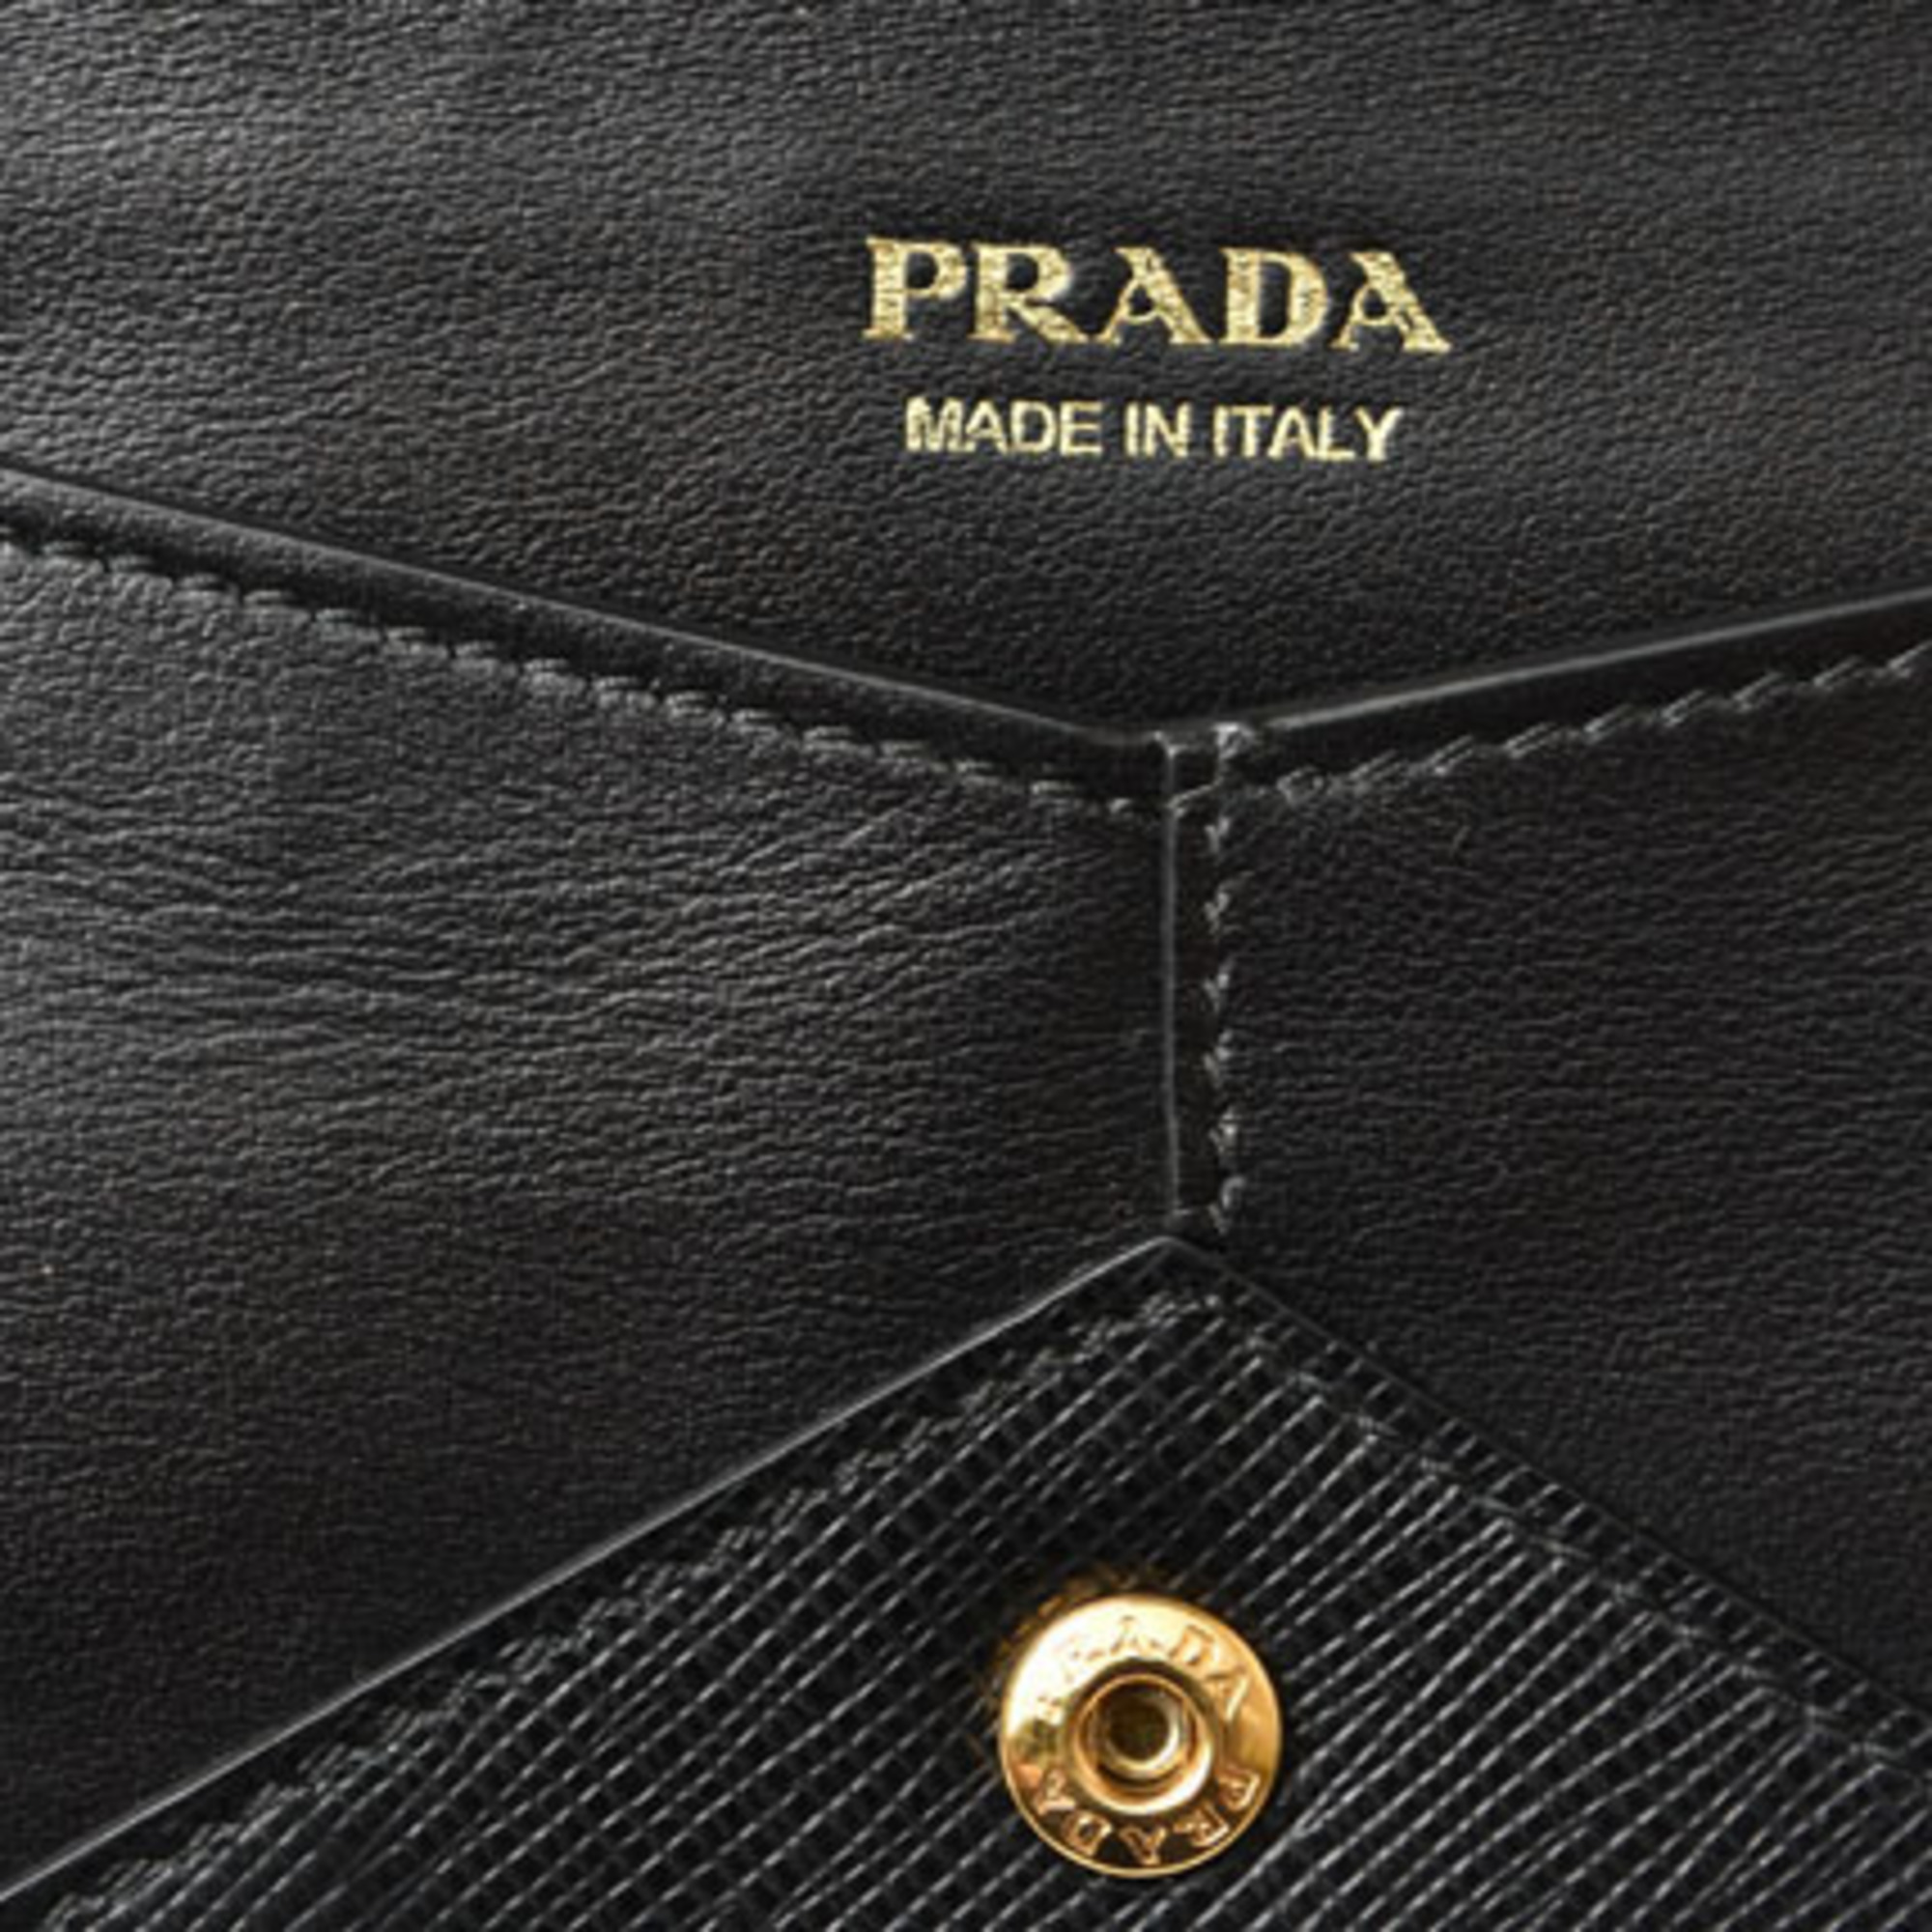 Prada wallet chain PRADA long 1MF002 SAFFIANO CITY NERO black